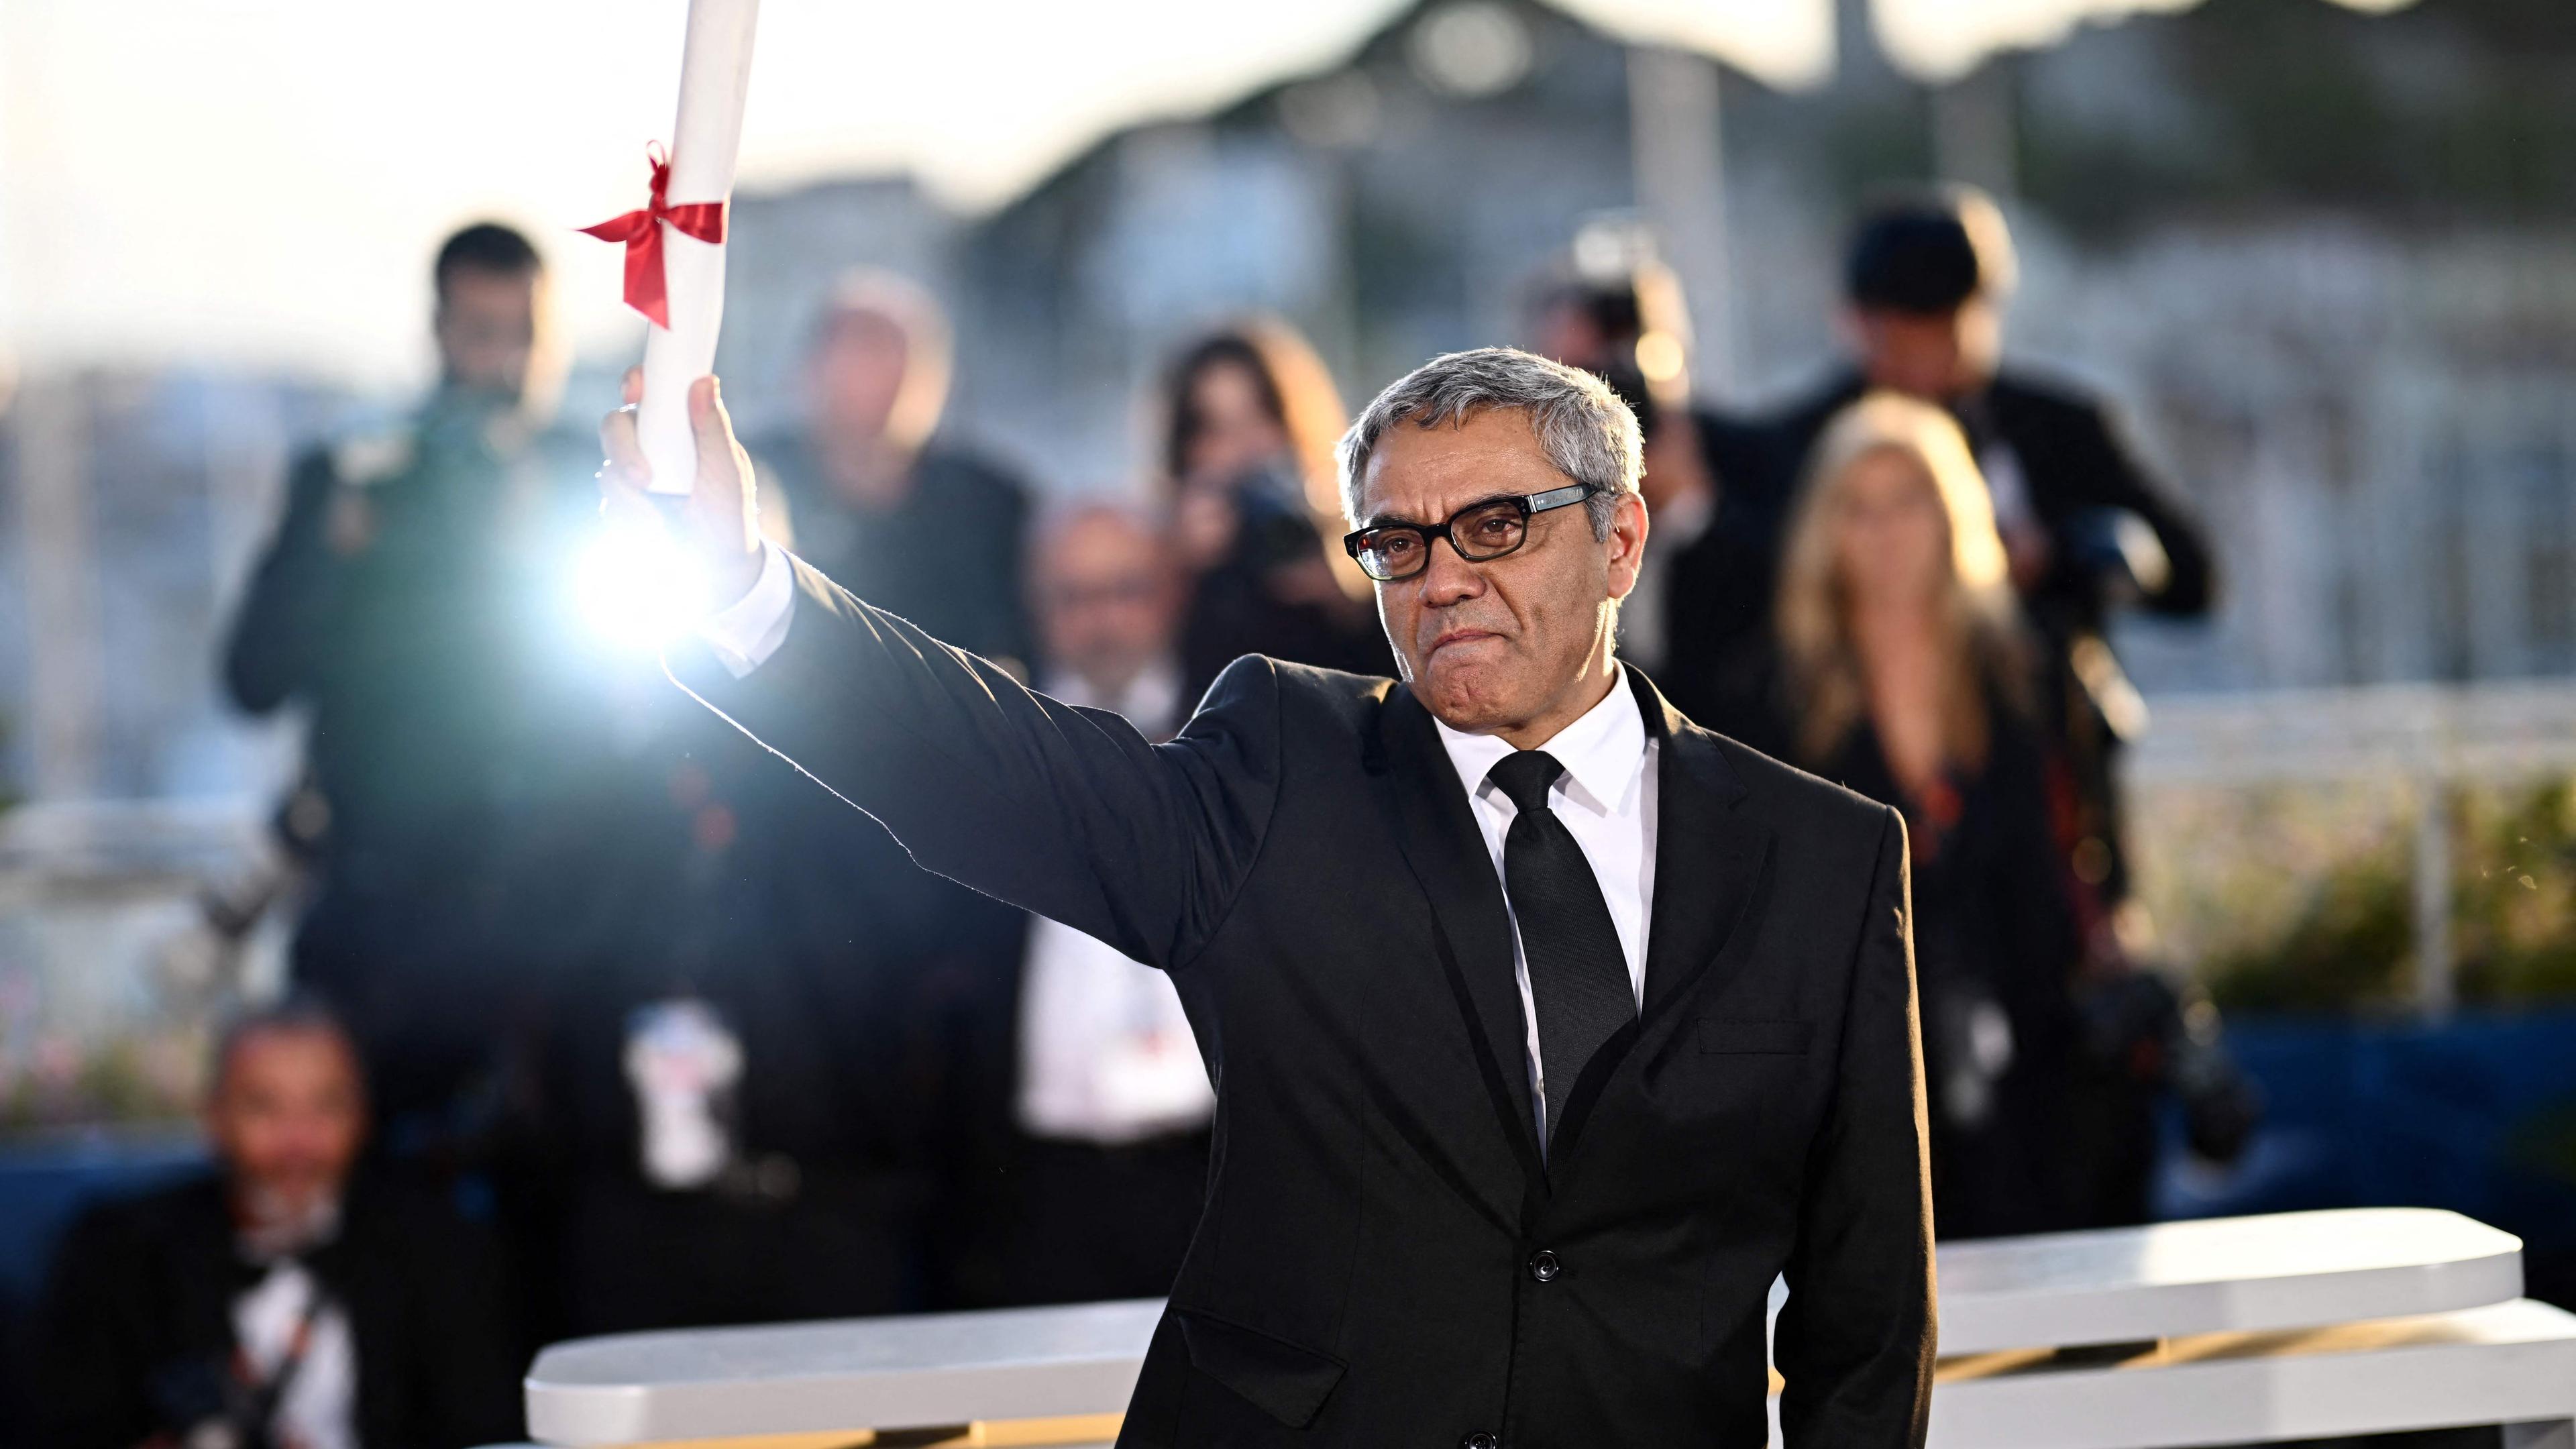 Der iranische Regisseur Mohammad Rasoulof posiert vor Fotografen in Cannes. 